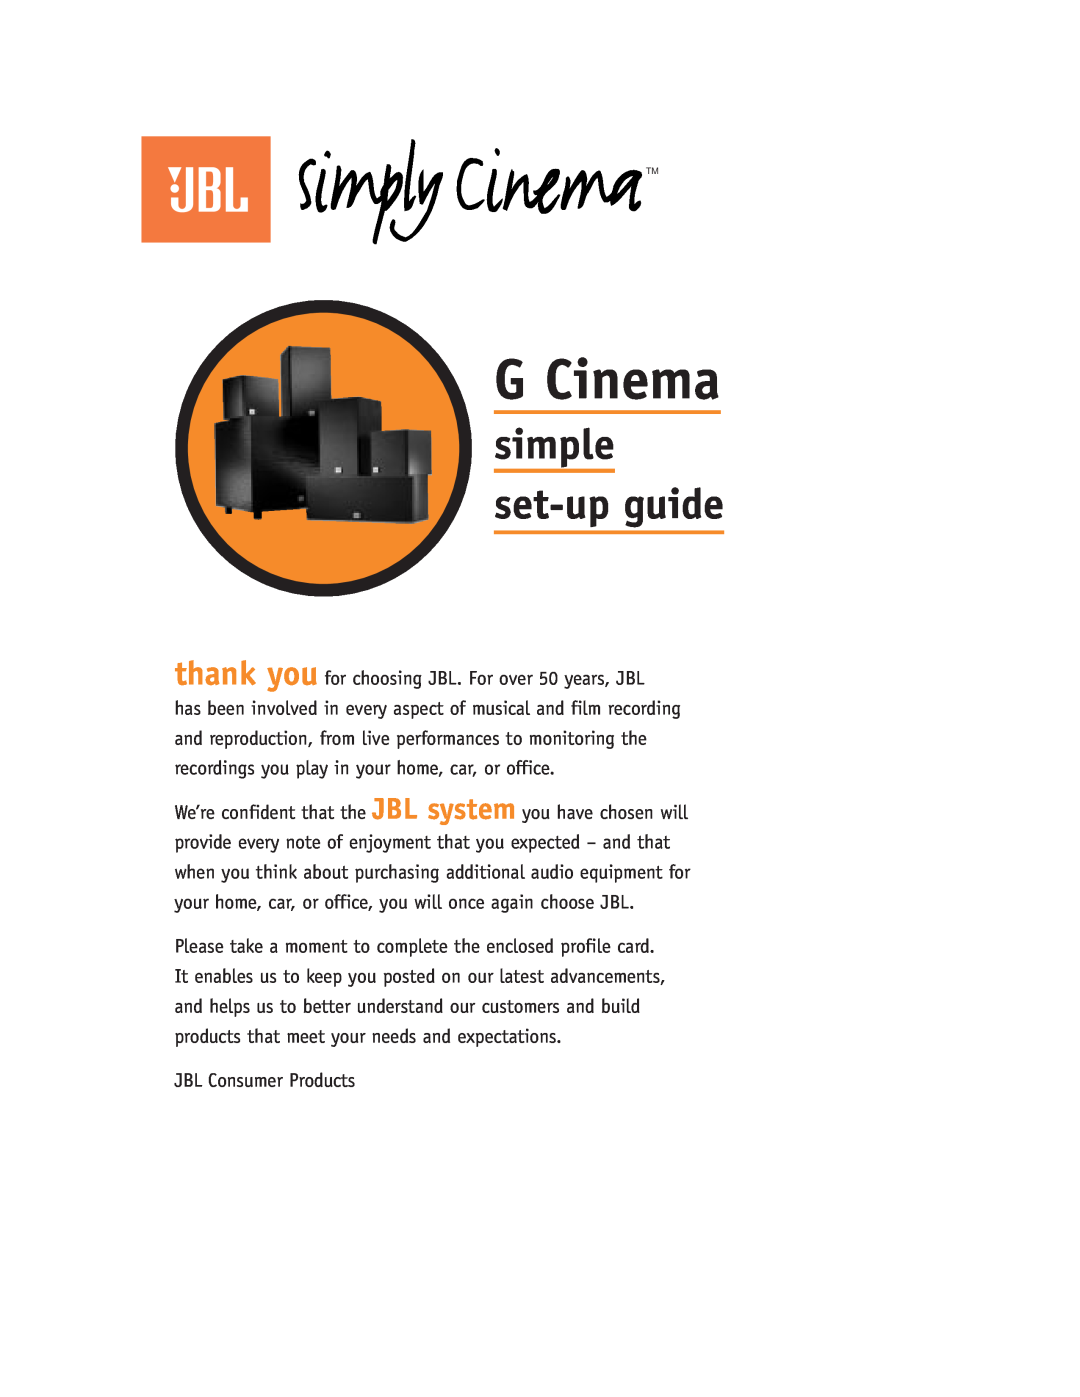 JBL G Cinema setup guide simple set-upguide, JBL Consumer Products 